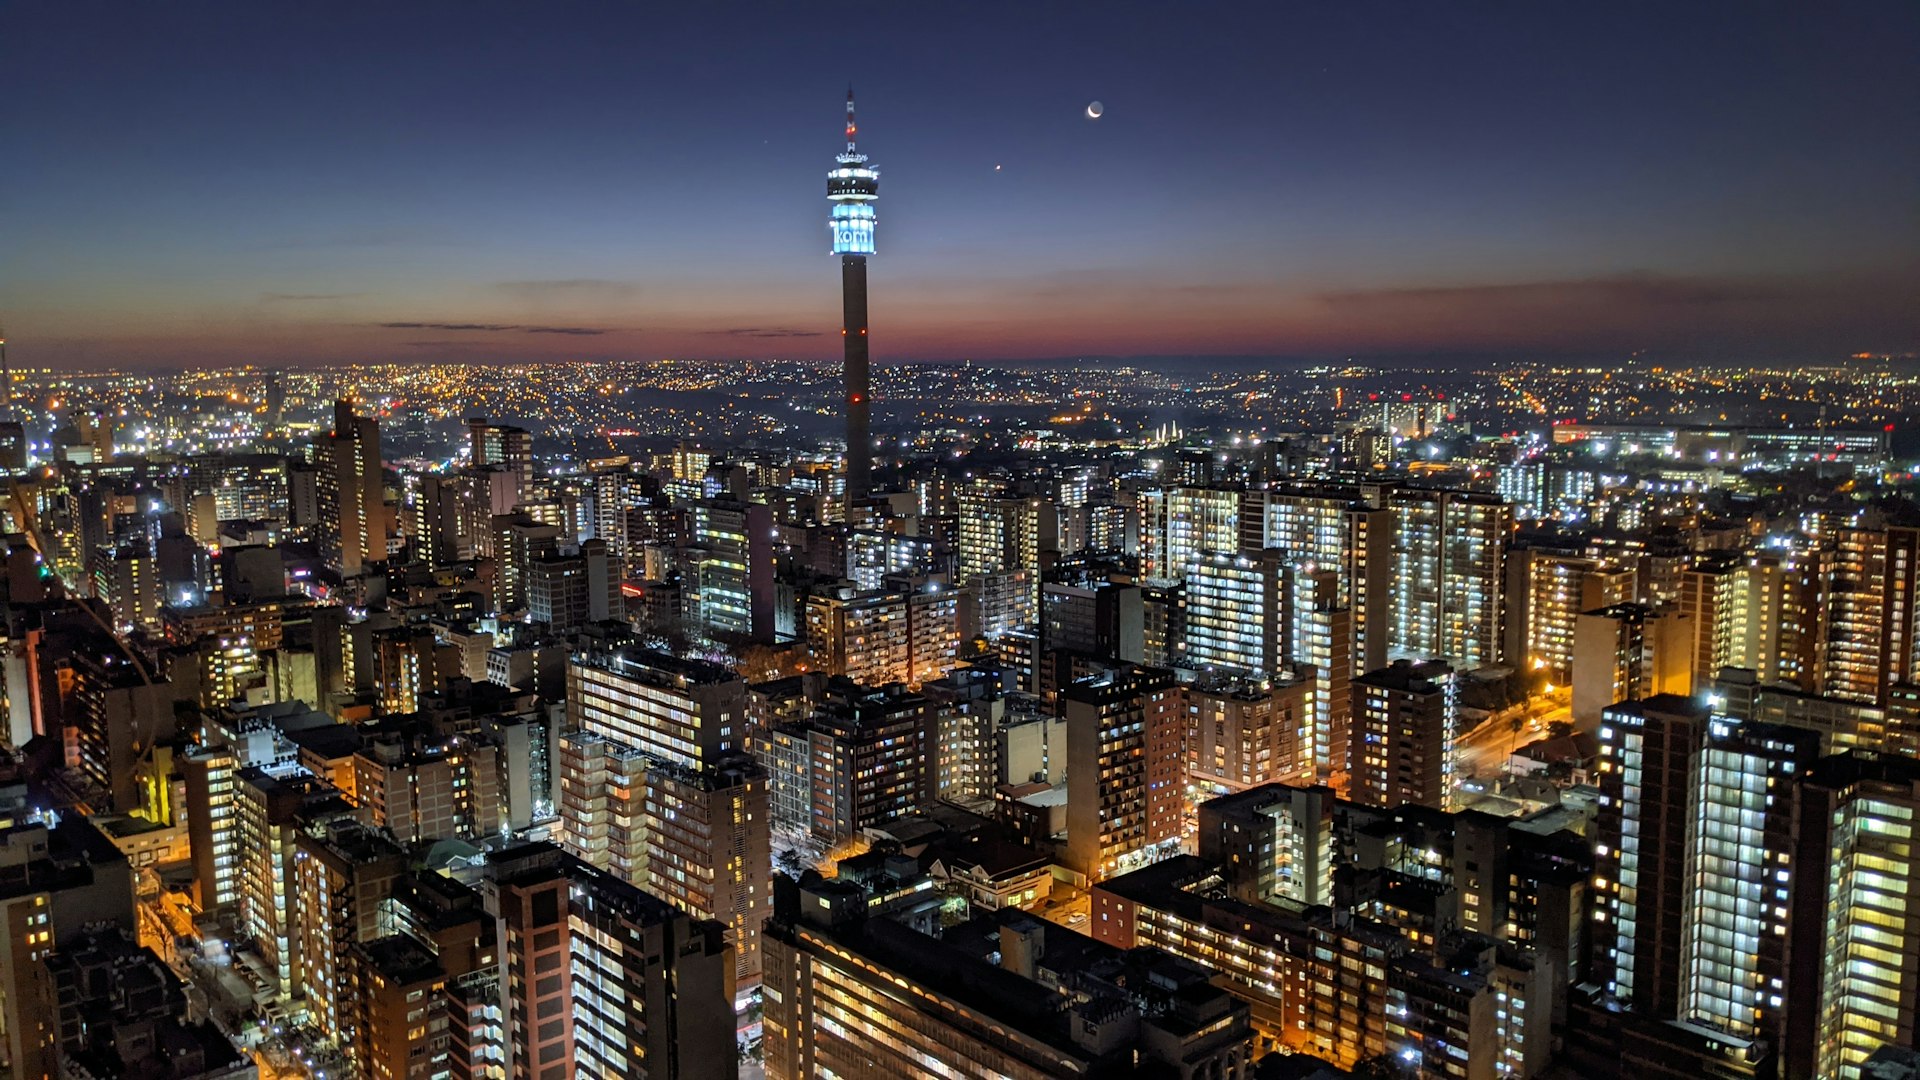 The lights of Johannesburg at night